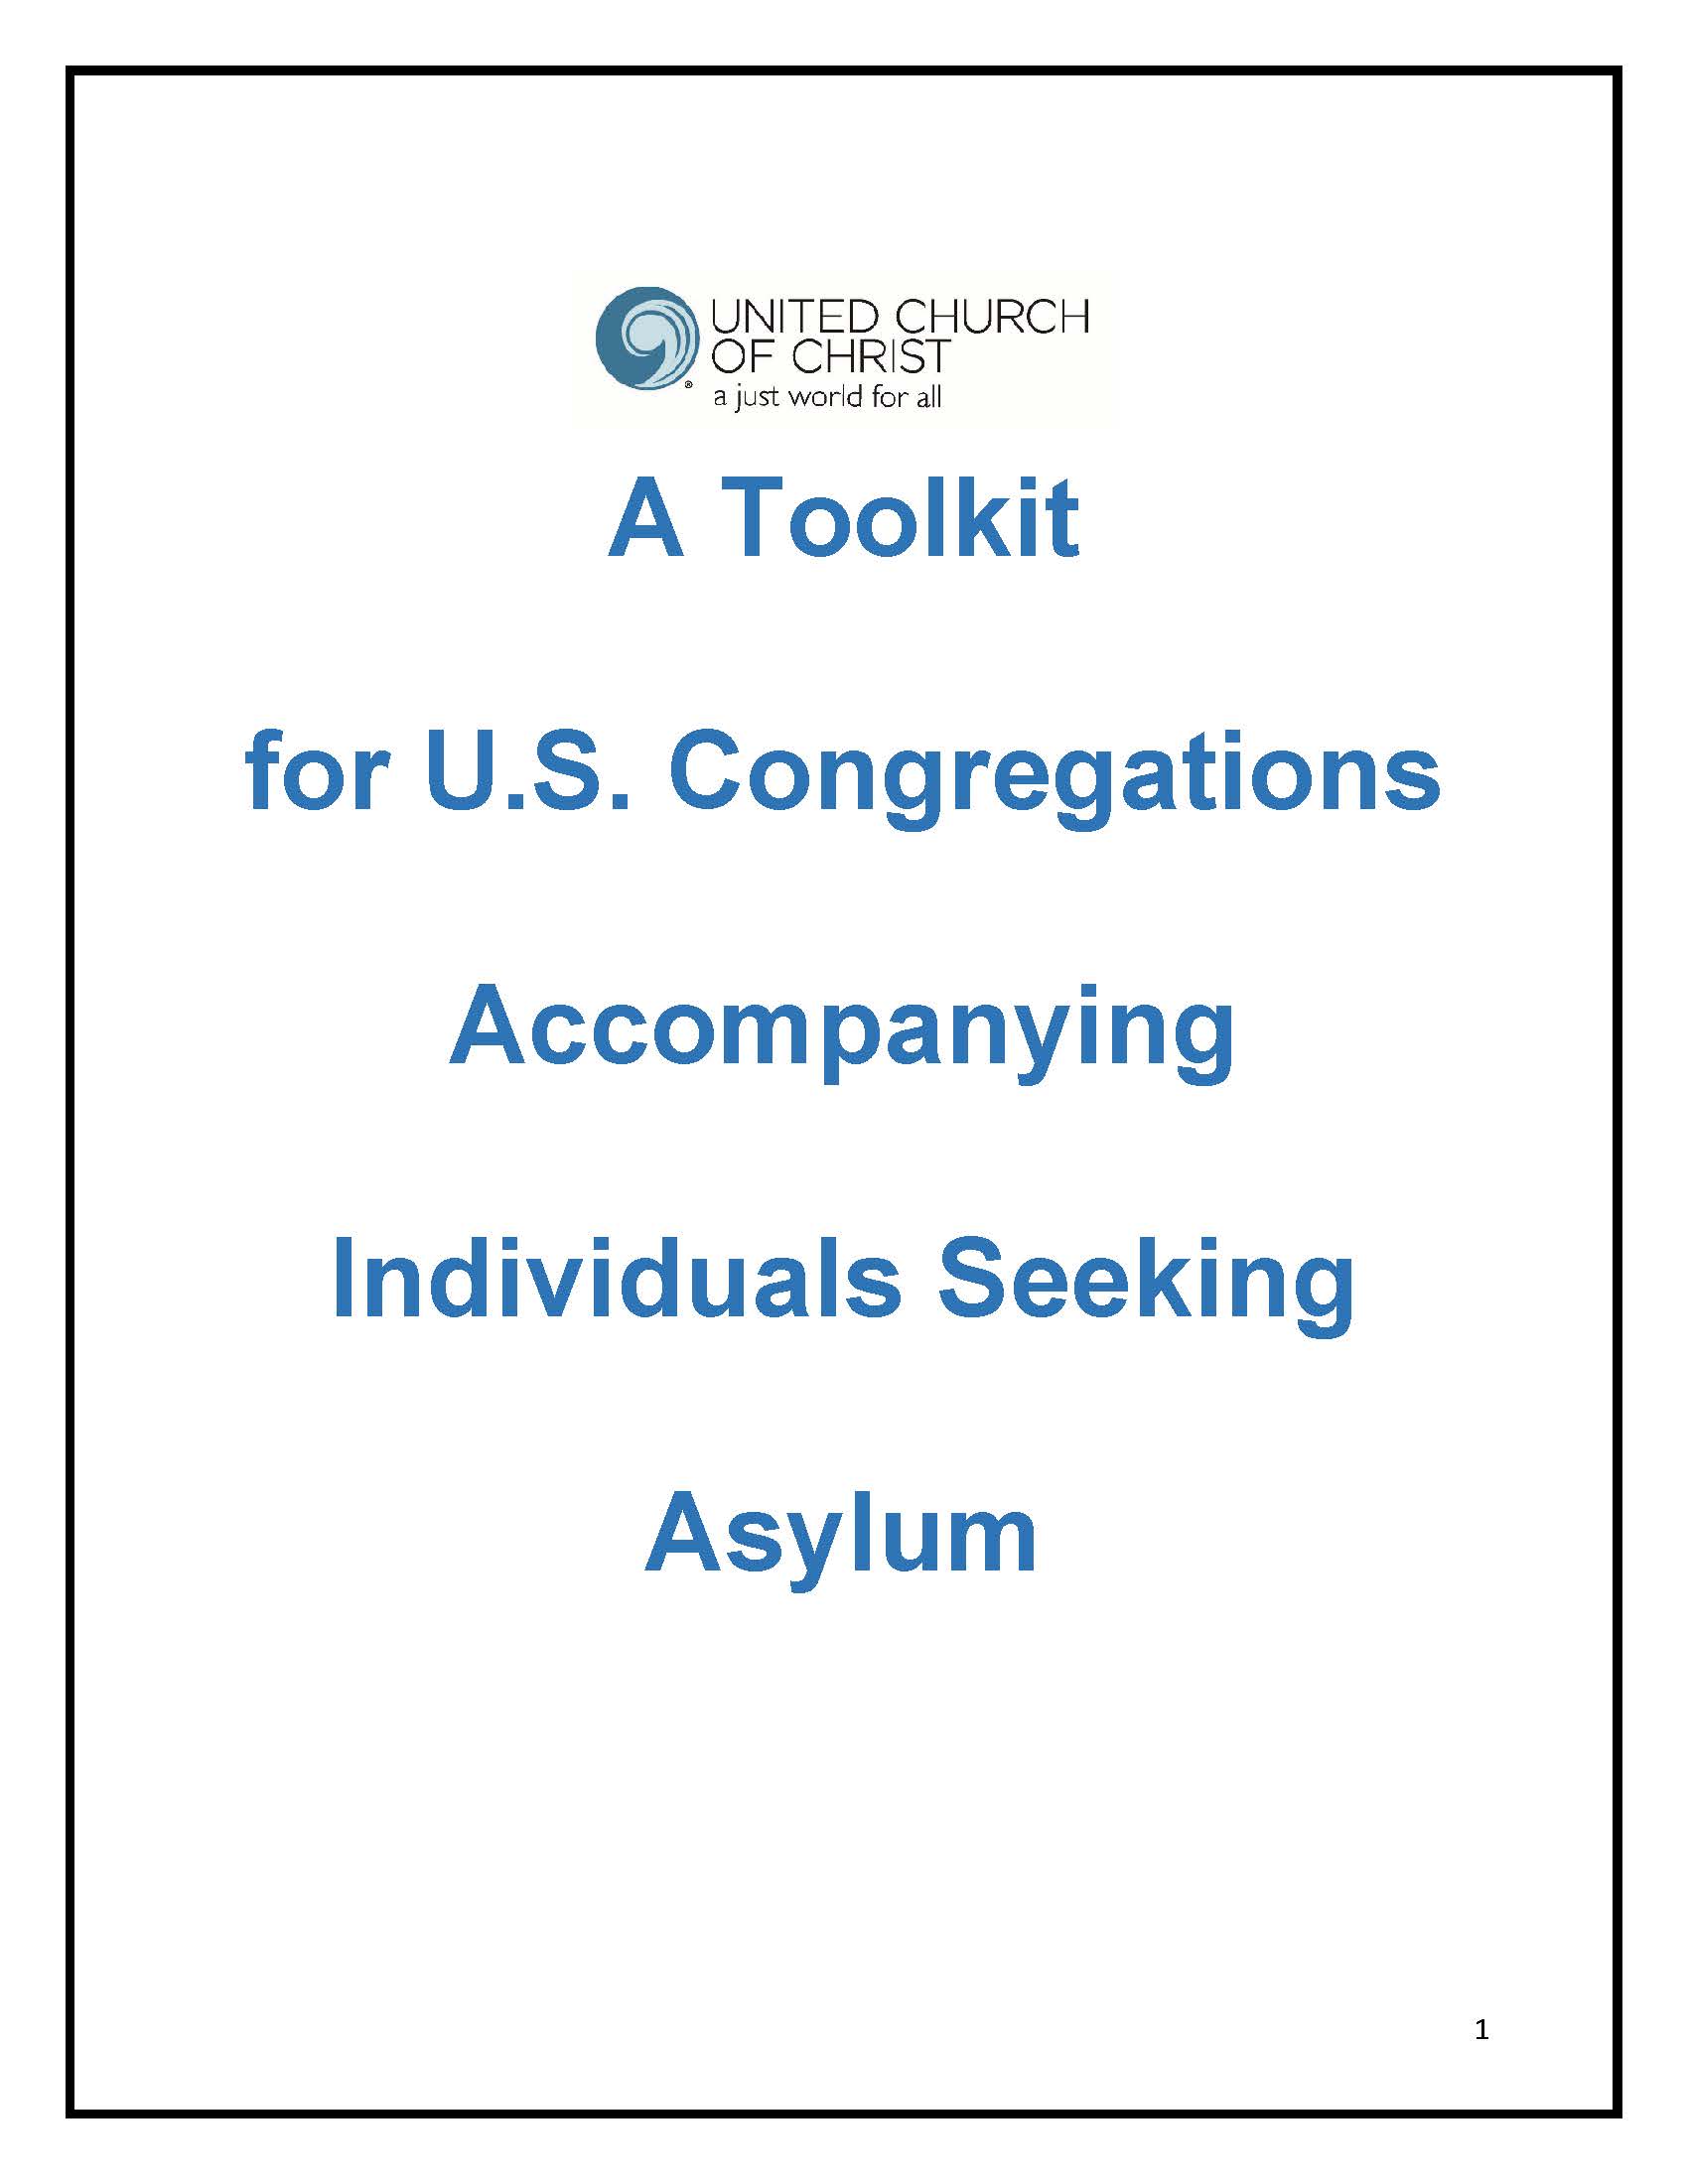 United_Church_of_Christ_Asylum_Accompaniment_Toolkit_2020_Page_01.jpg